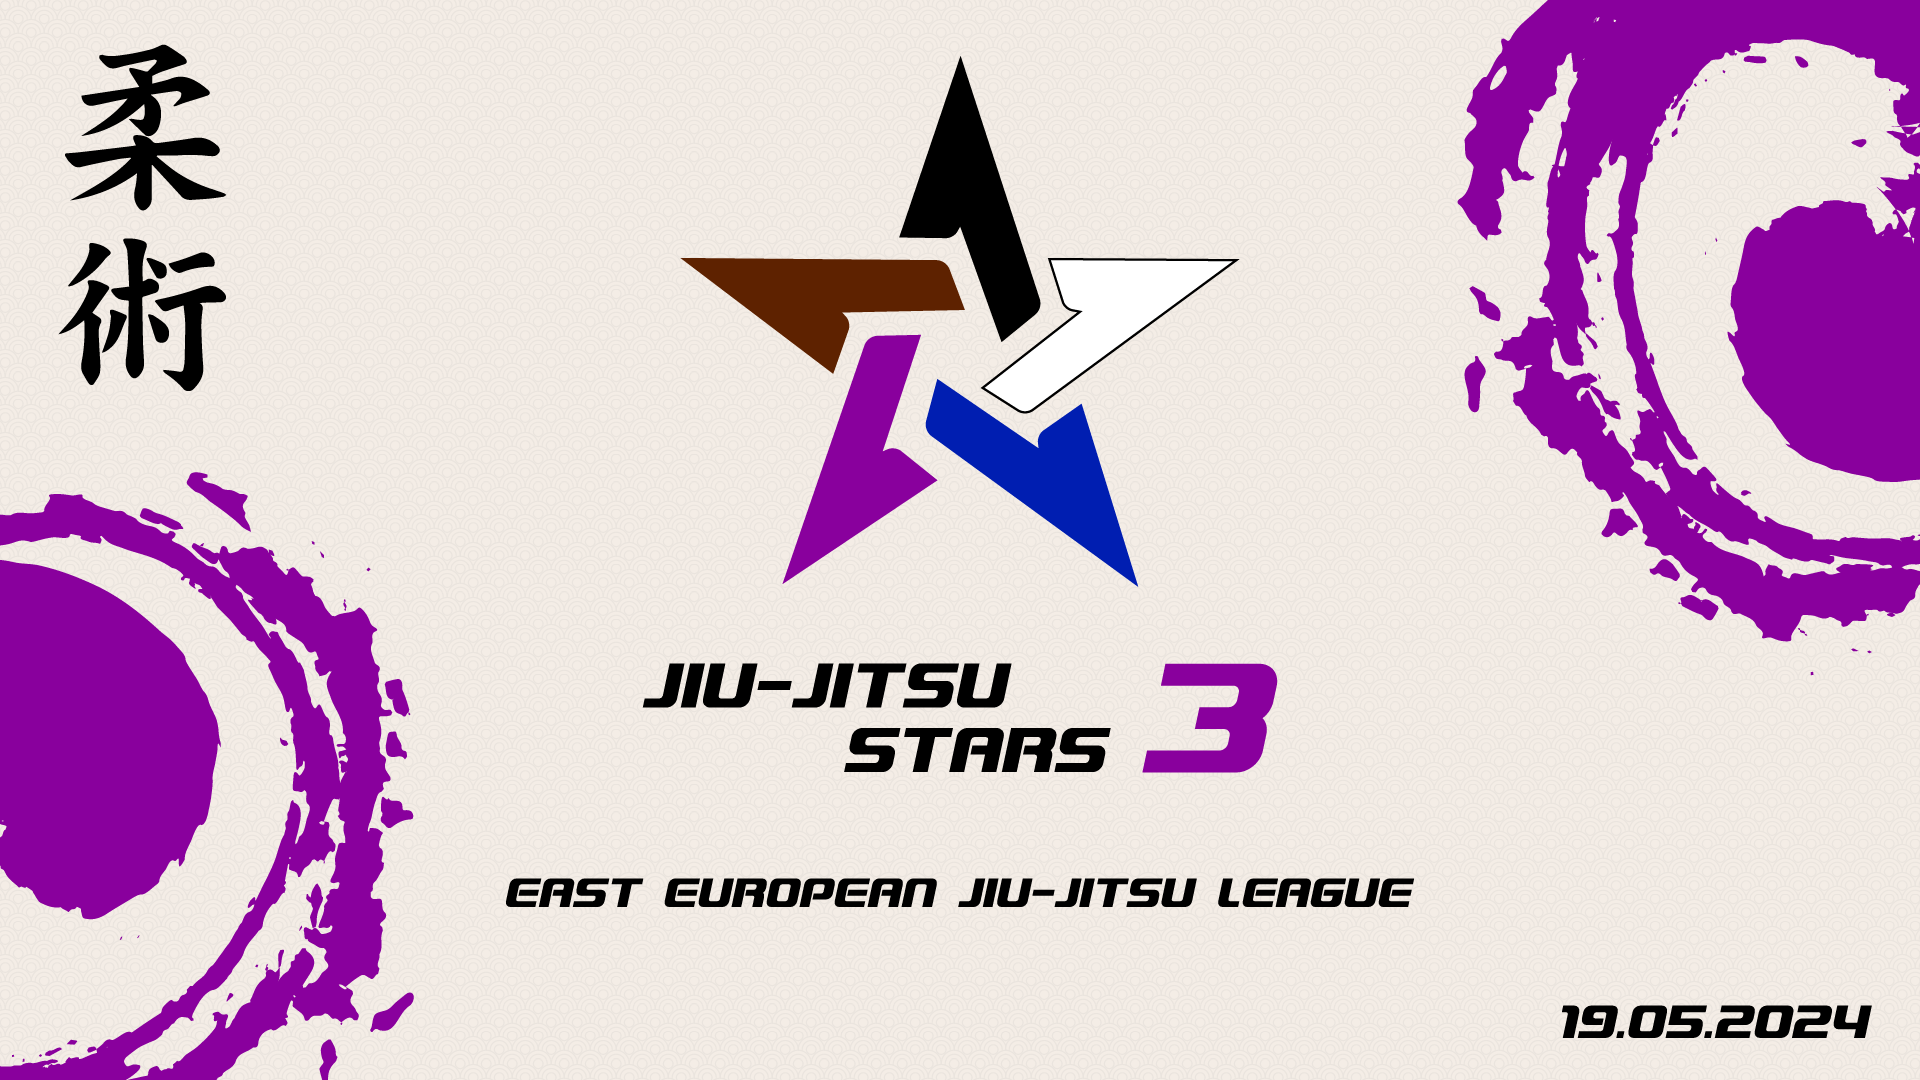 JIU-JITSU STARS 3